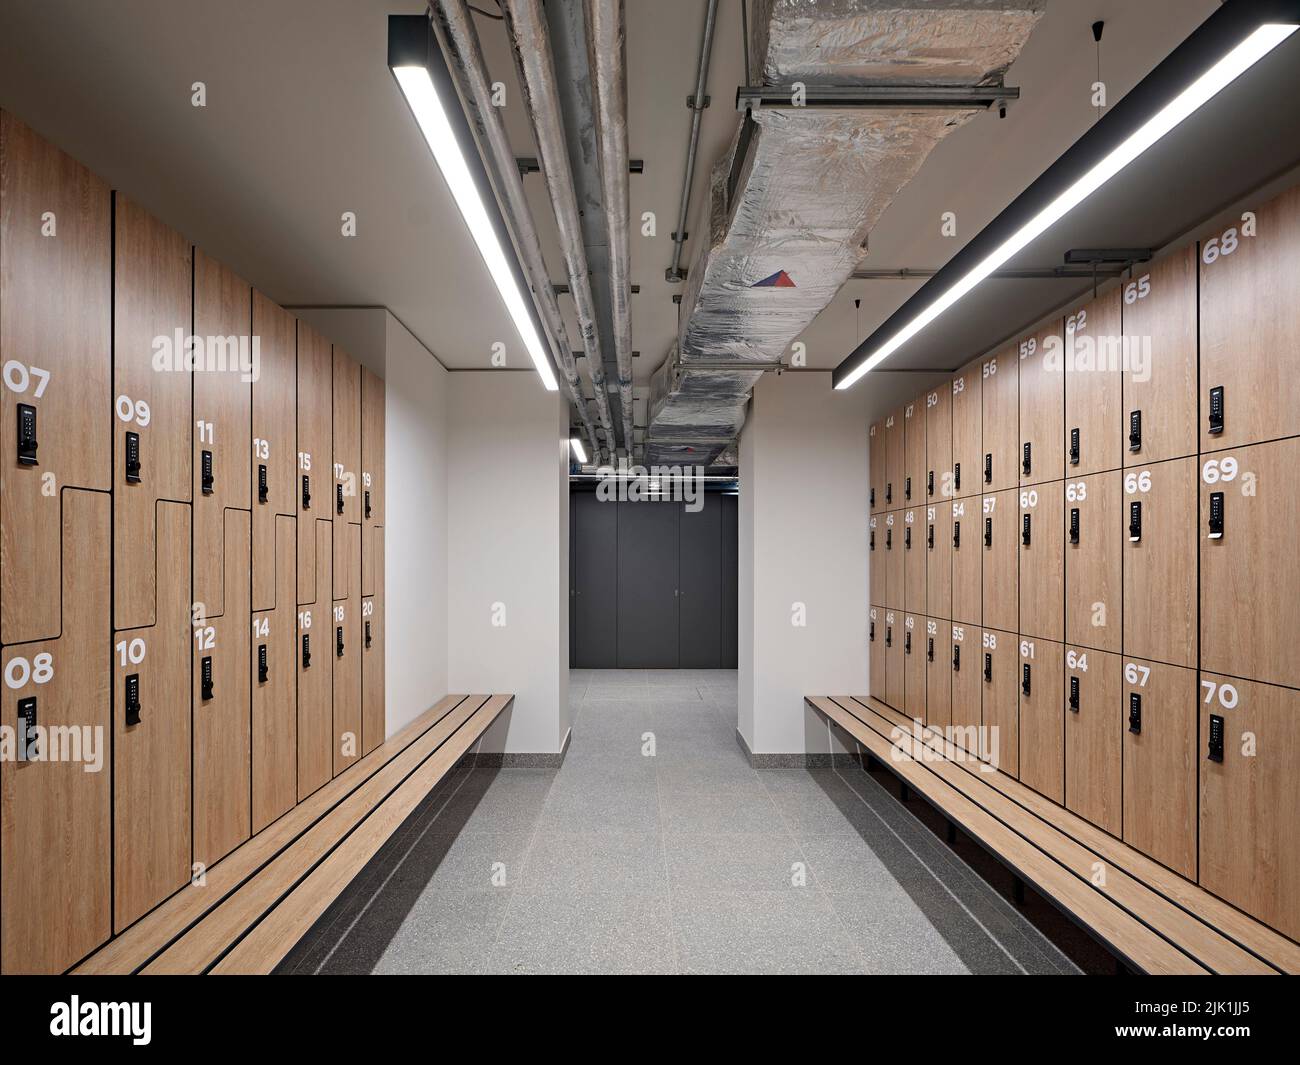 Basement locker room. The Gilbert & One Lackington, London, United Kingdom. Architect: Stiff + Trevillion Architects, 2021. Stock Photo